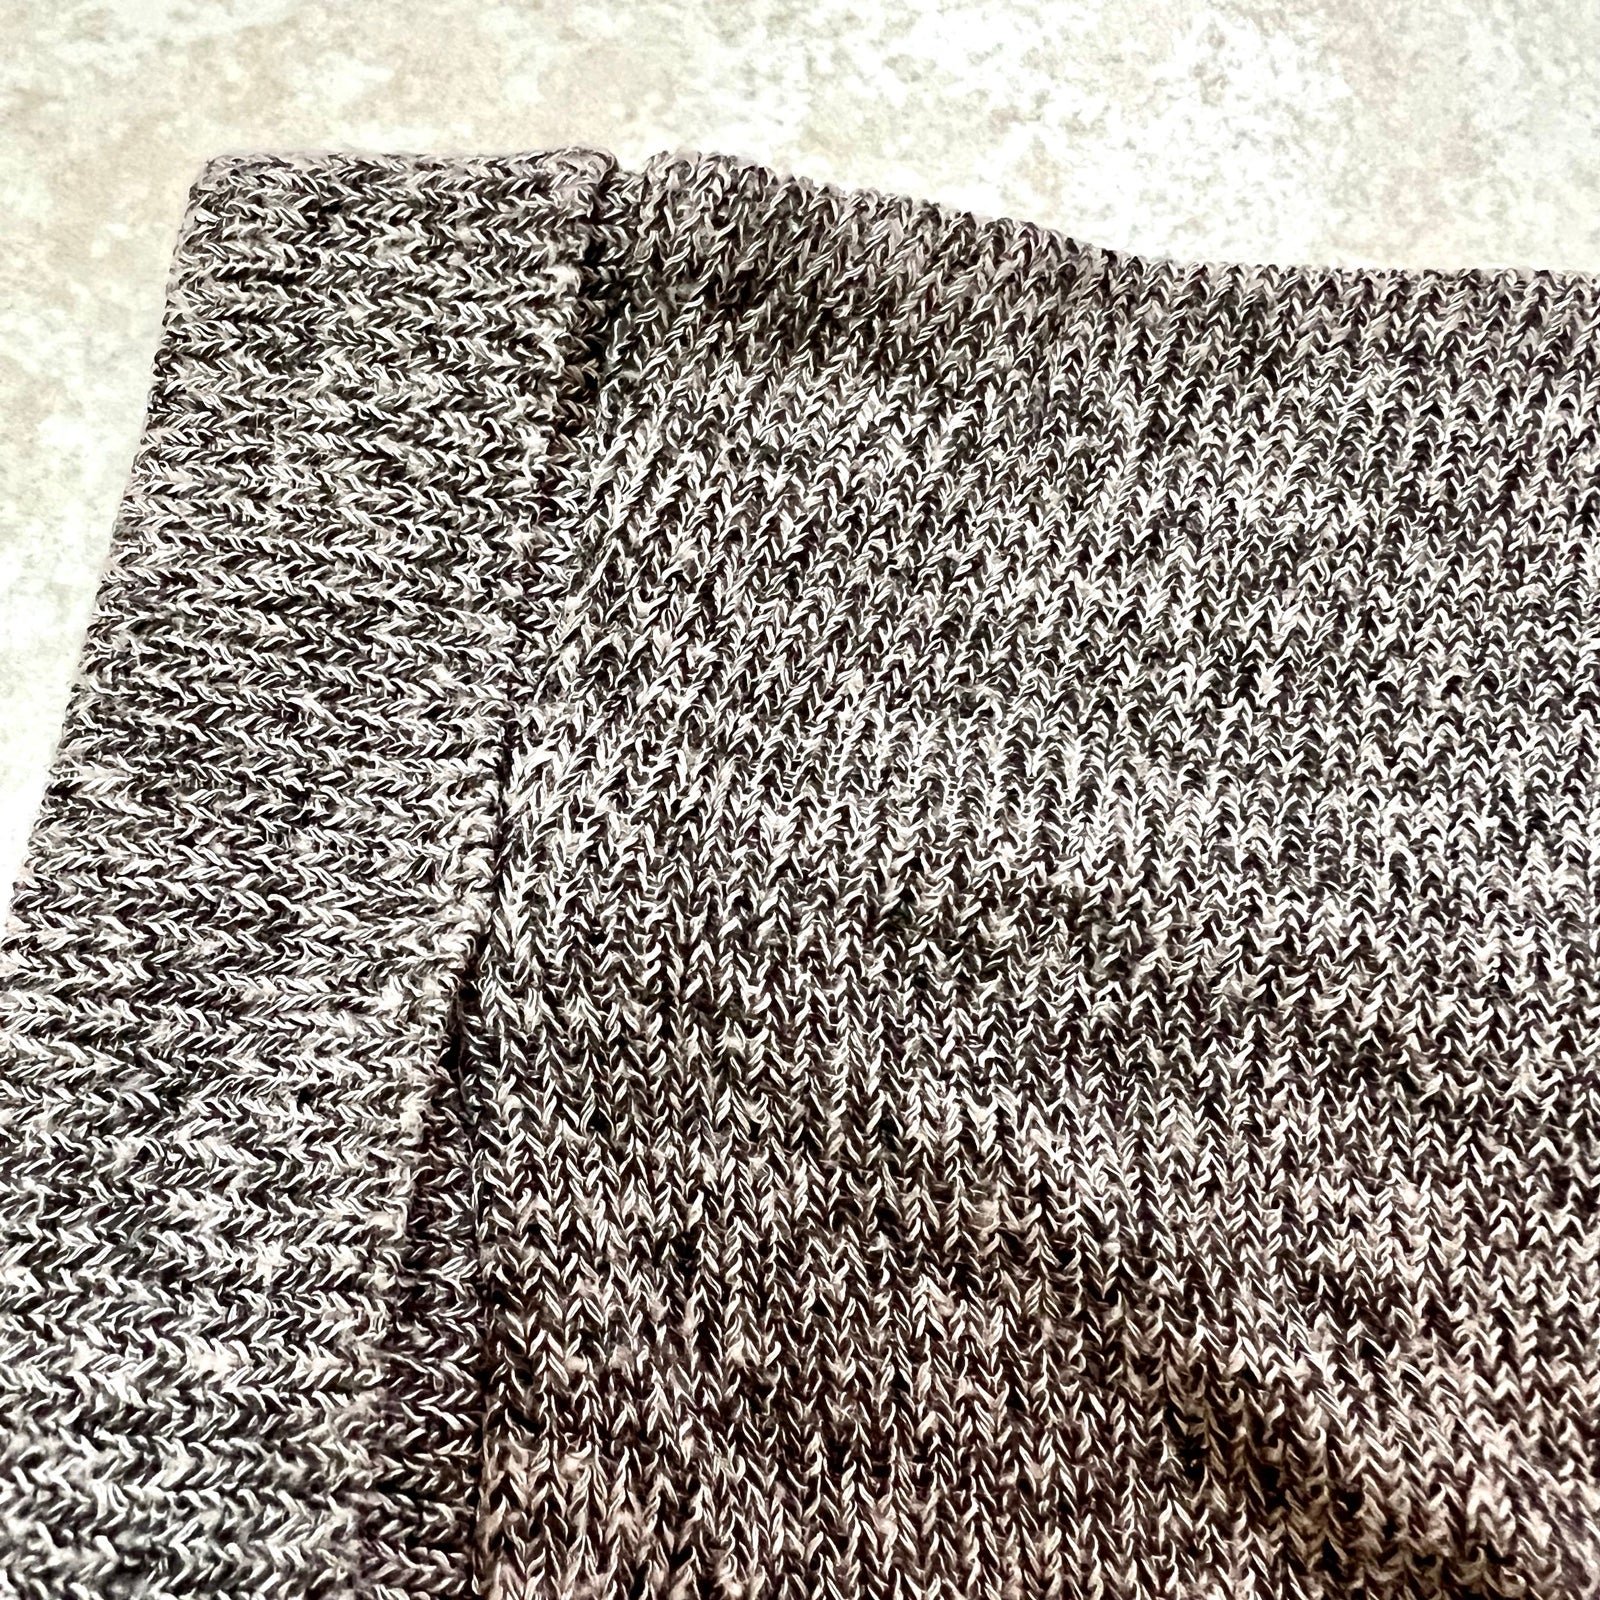 Wholesale price Jolie Lightweight Knit Short-Sleeve Hi-Low Sweater Top KOP1XOYET Great